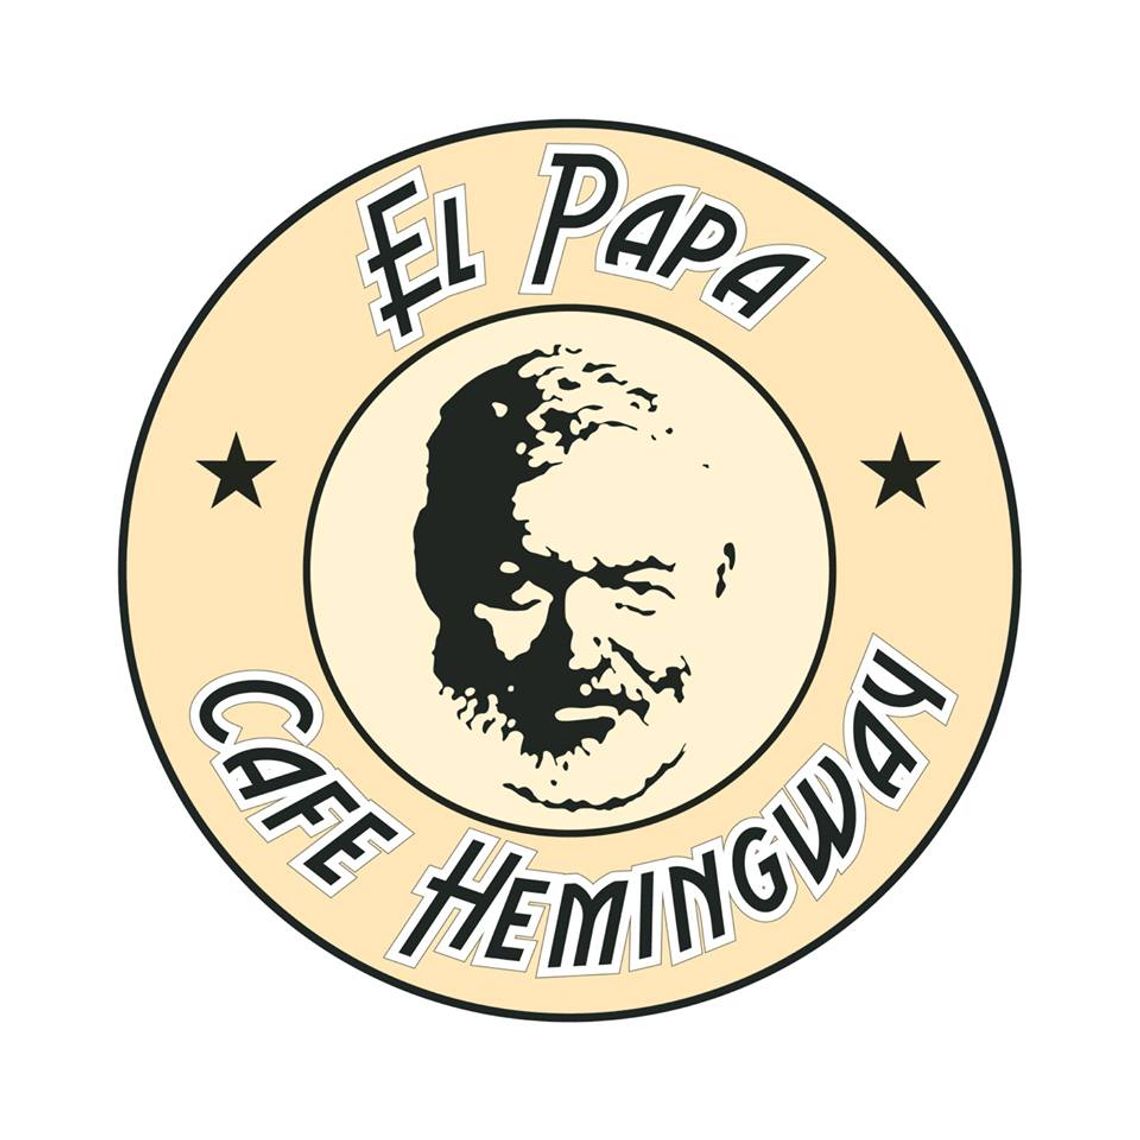 El Papa - Cafe Hemingway